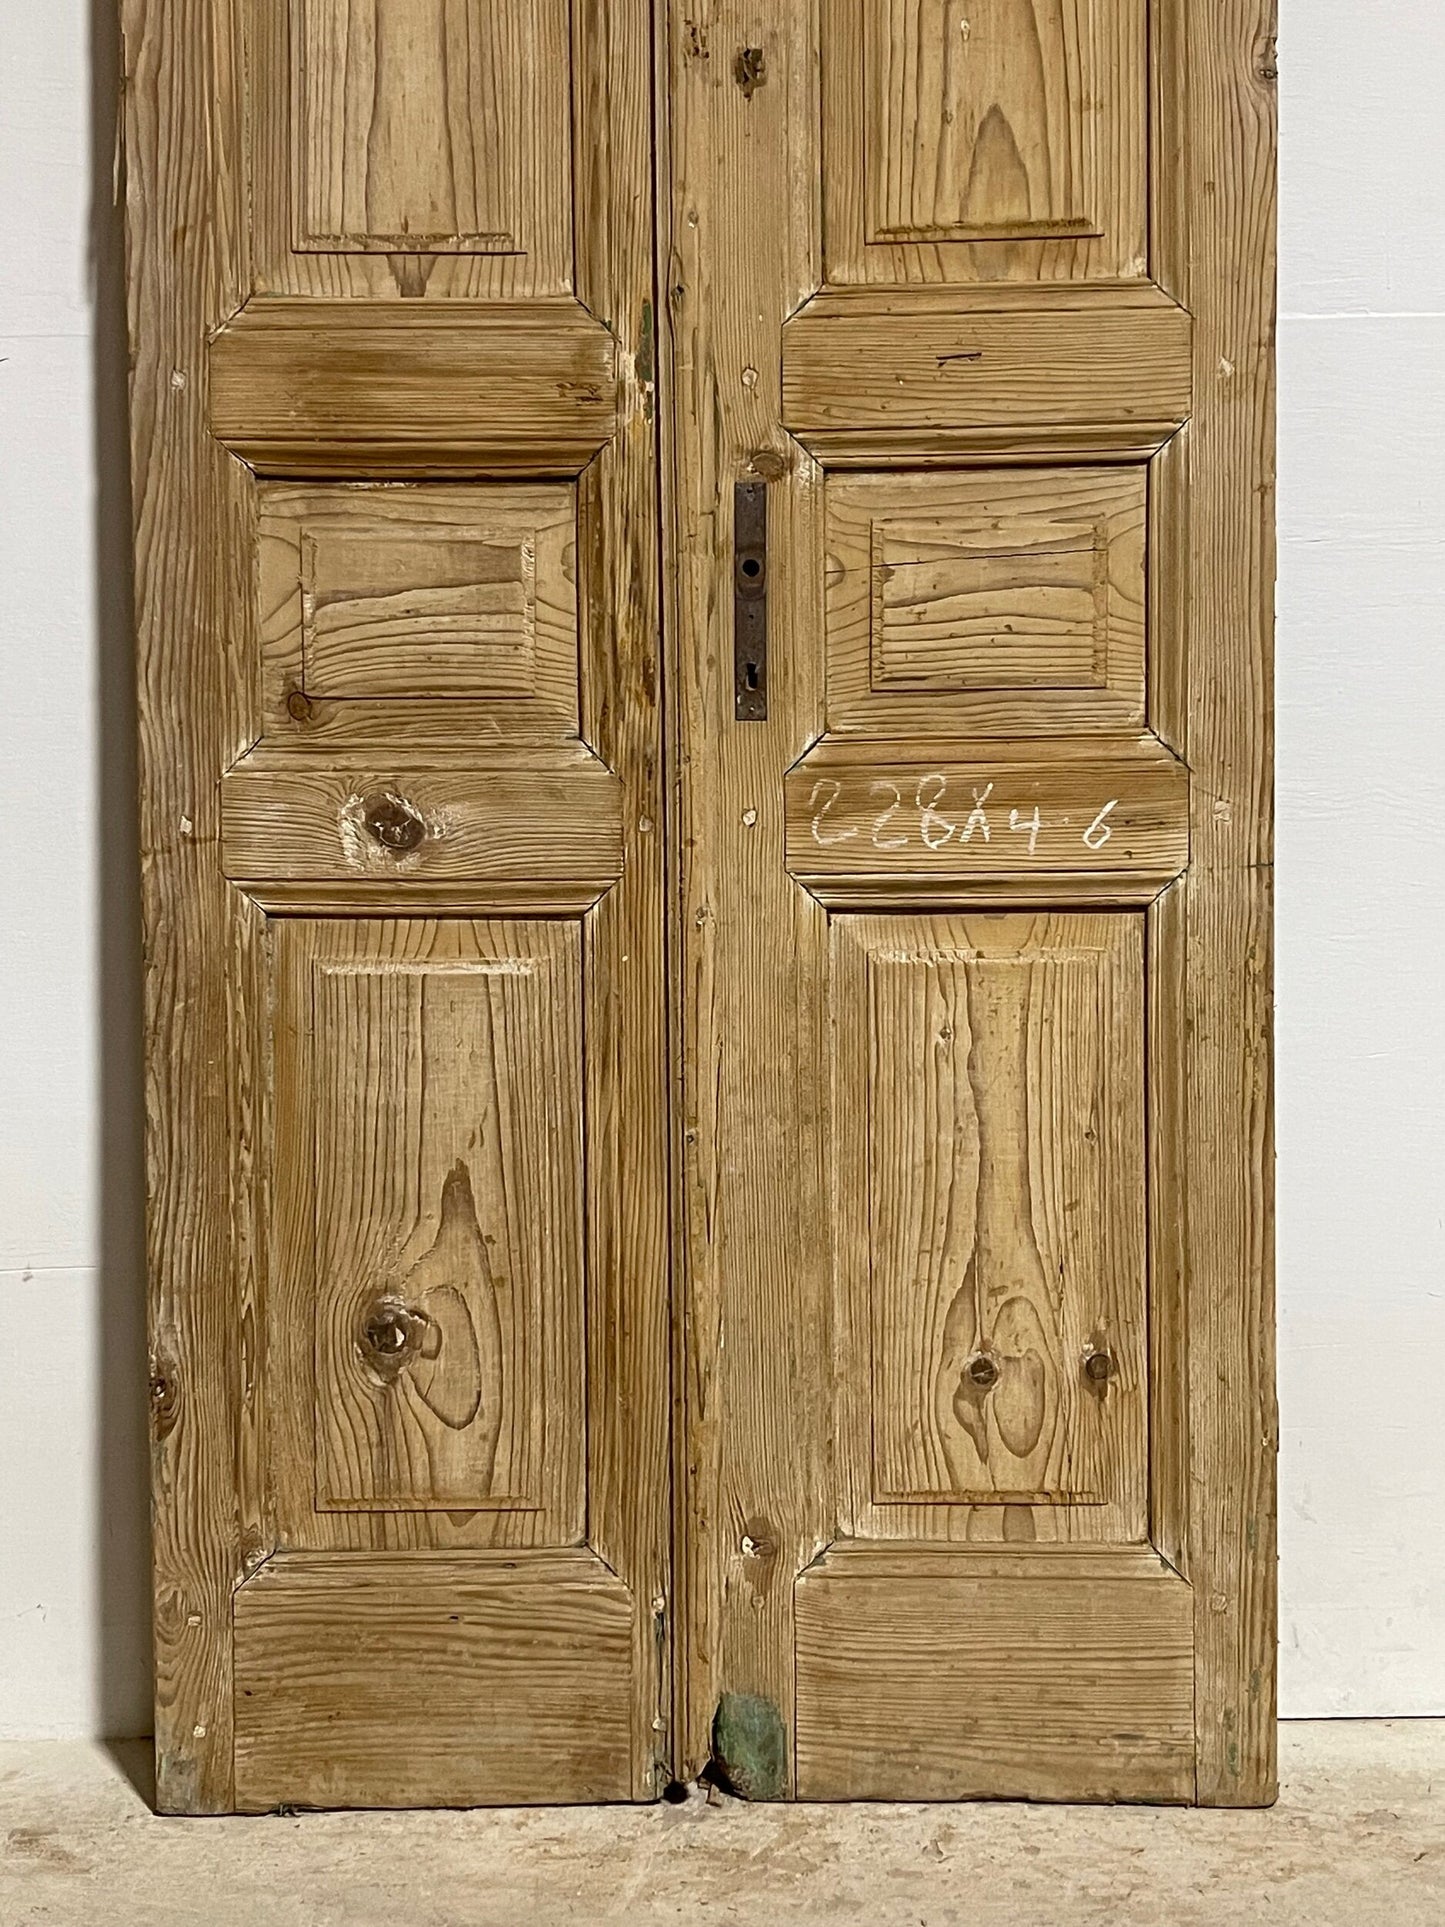 Antique French panel doors (89.75x36.25) I114